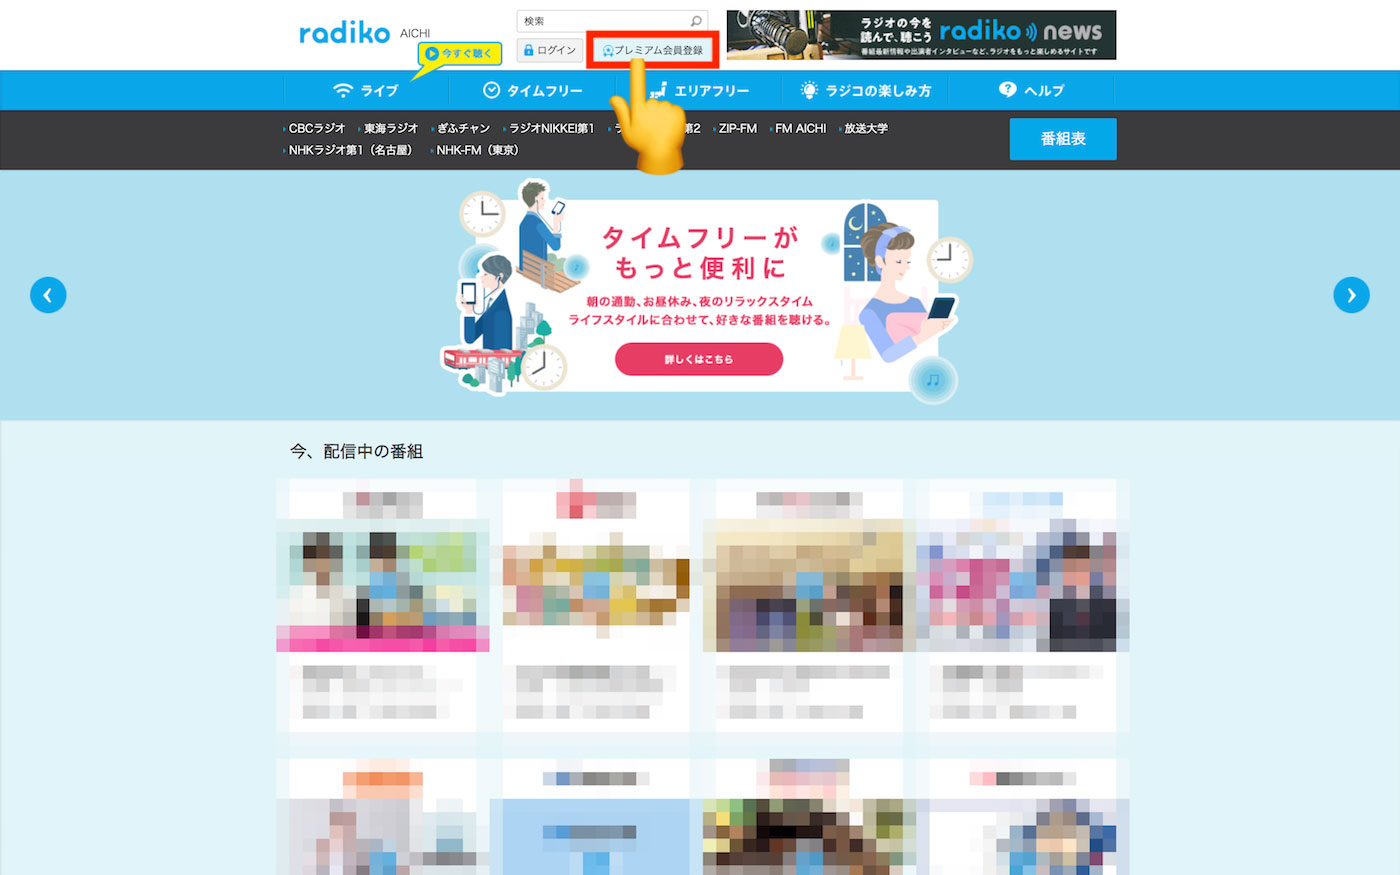 radikoのWebサイトの上部にある「プレミアム会員登録」ボタン